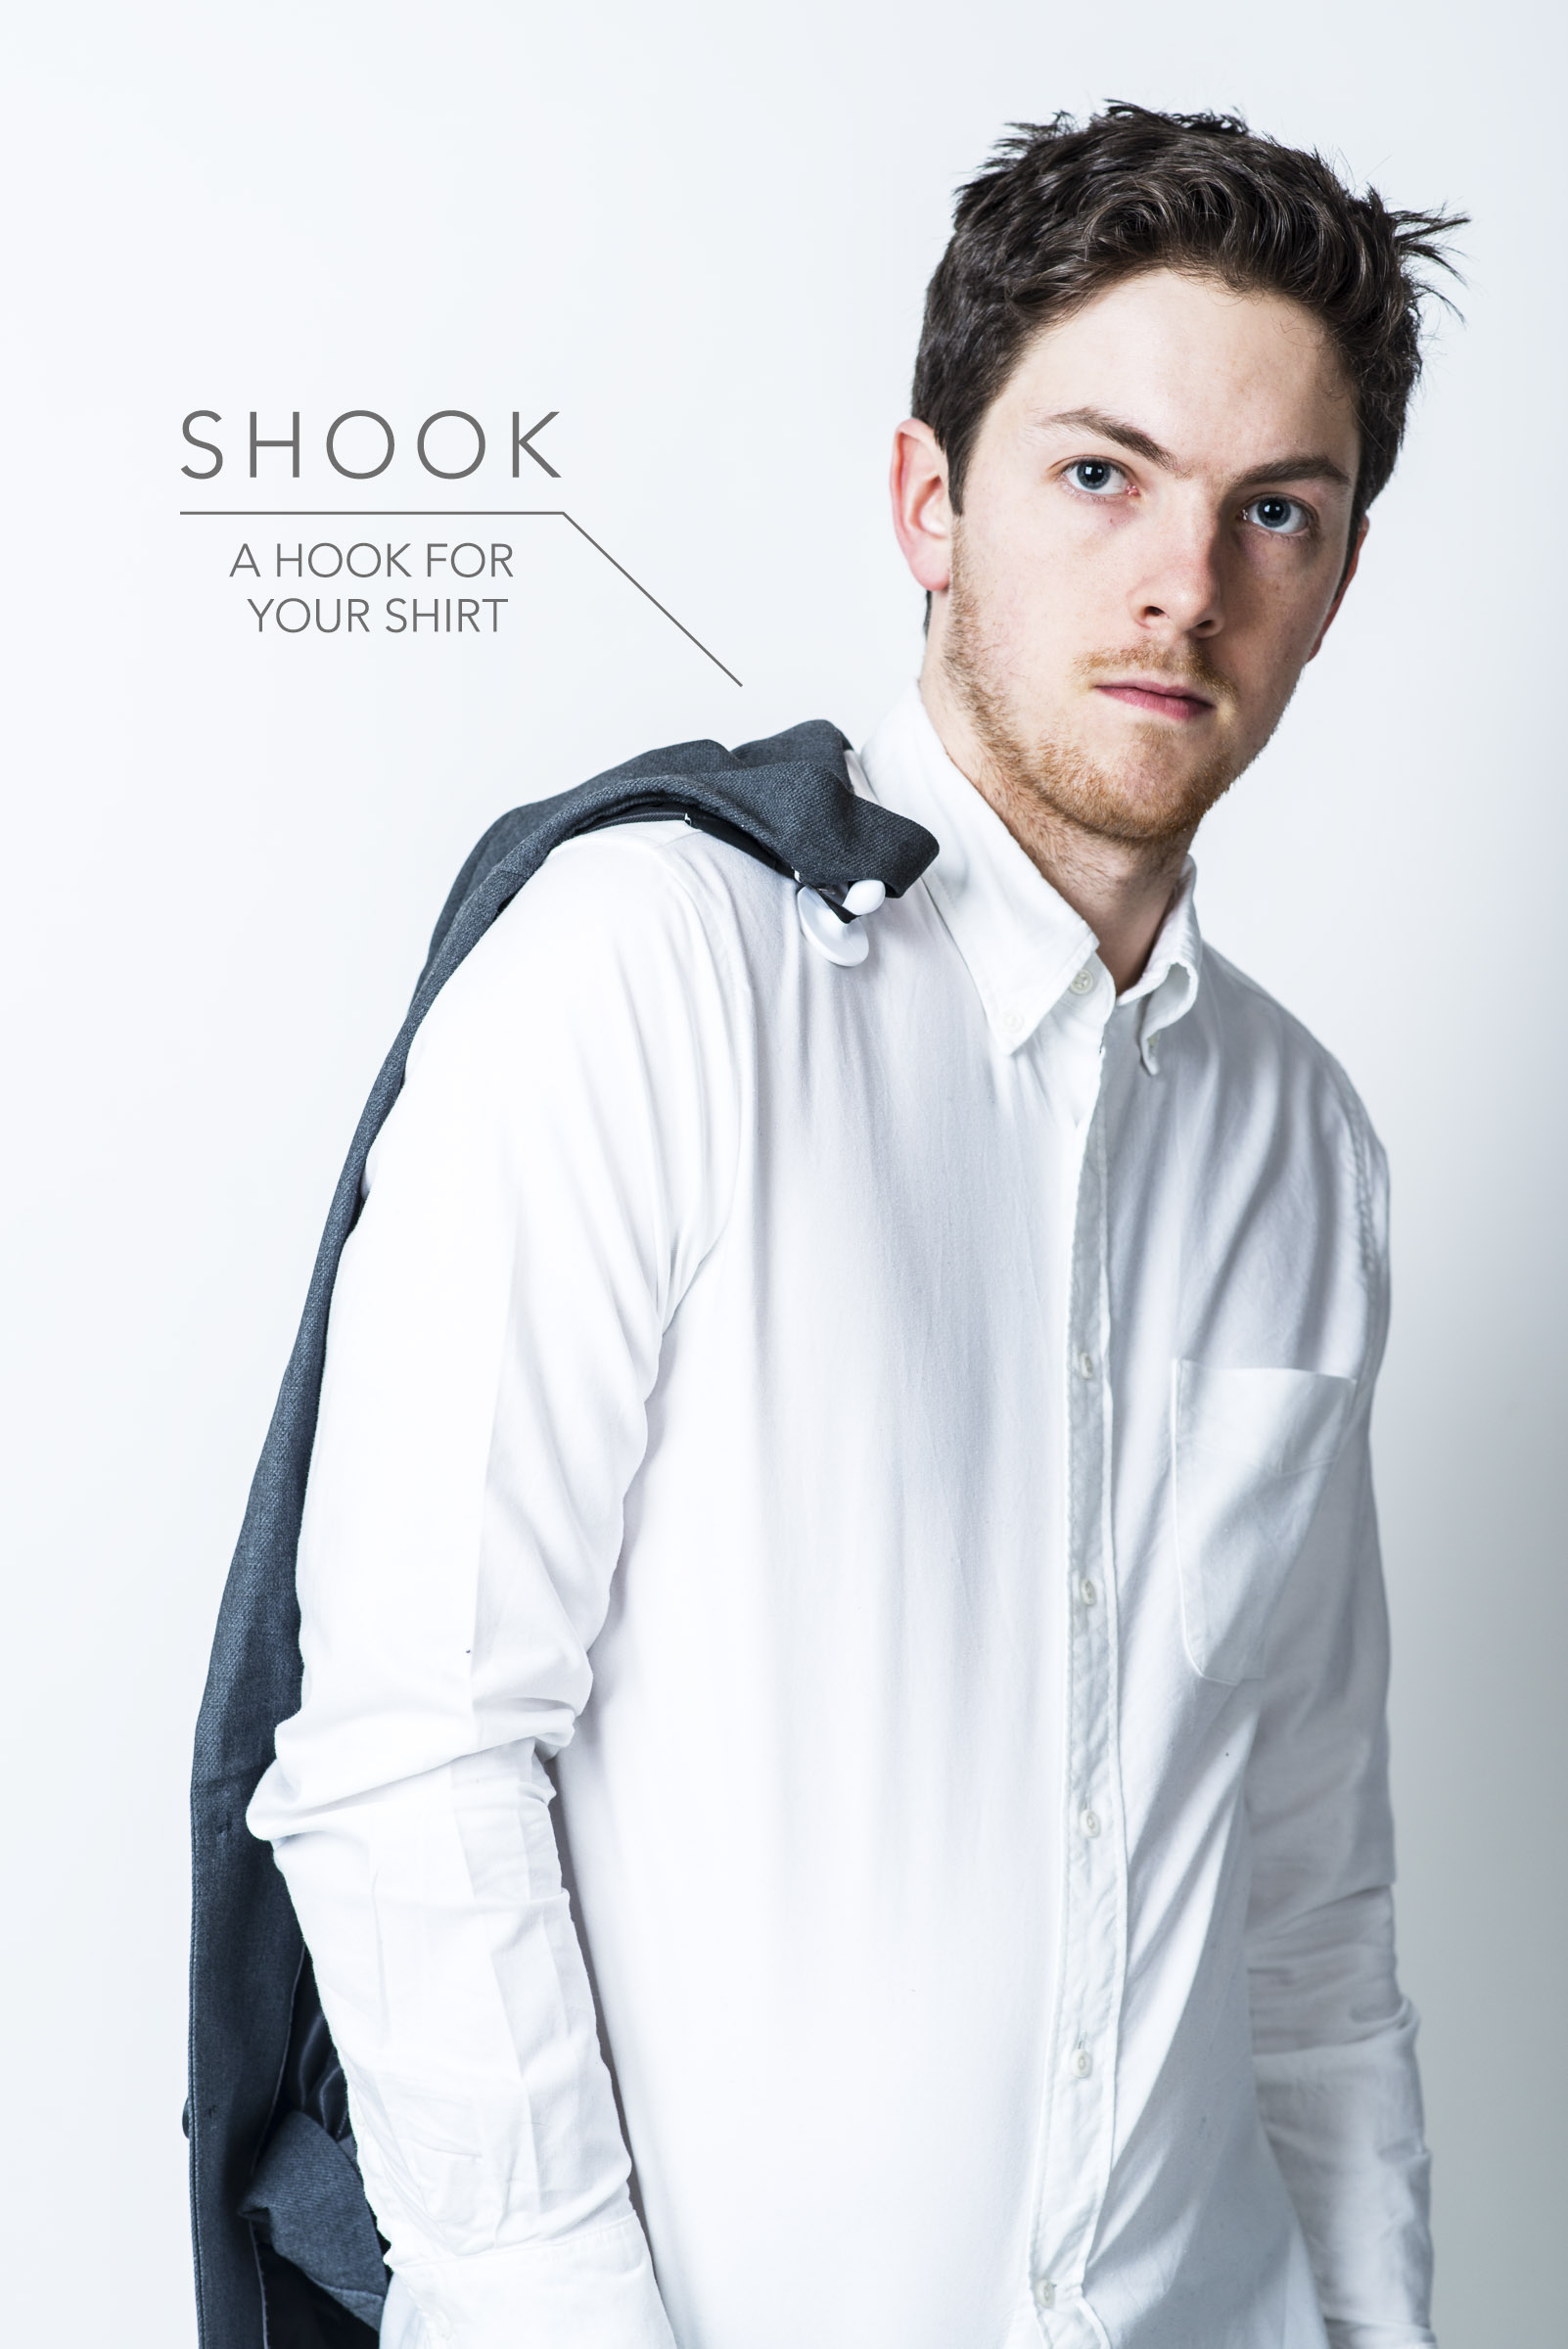 Shook Headshot